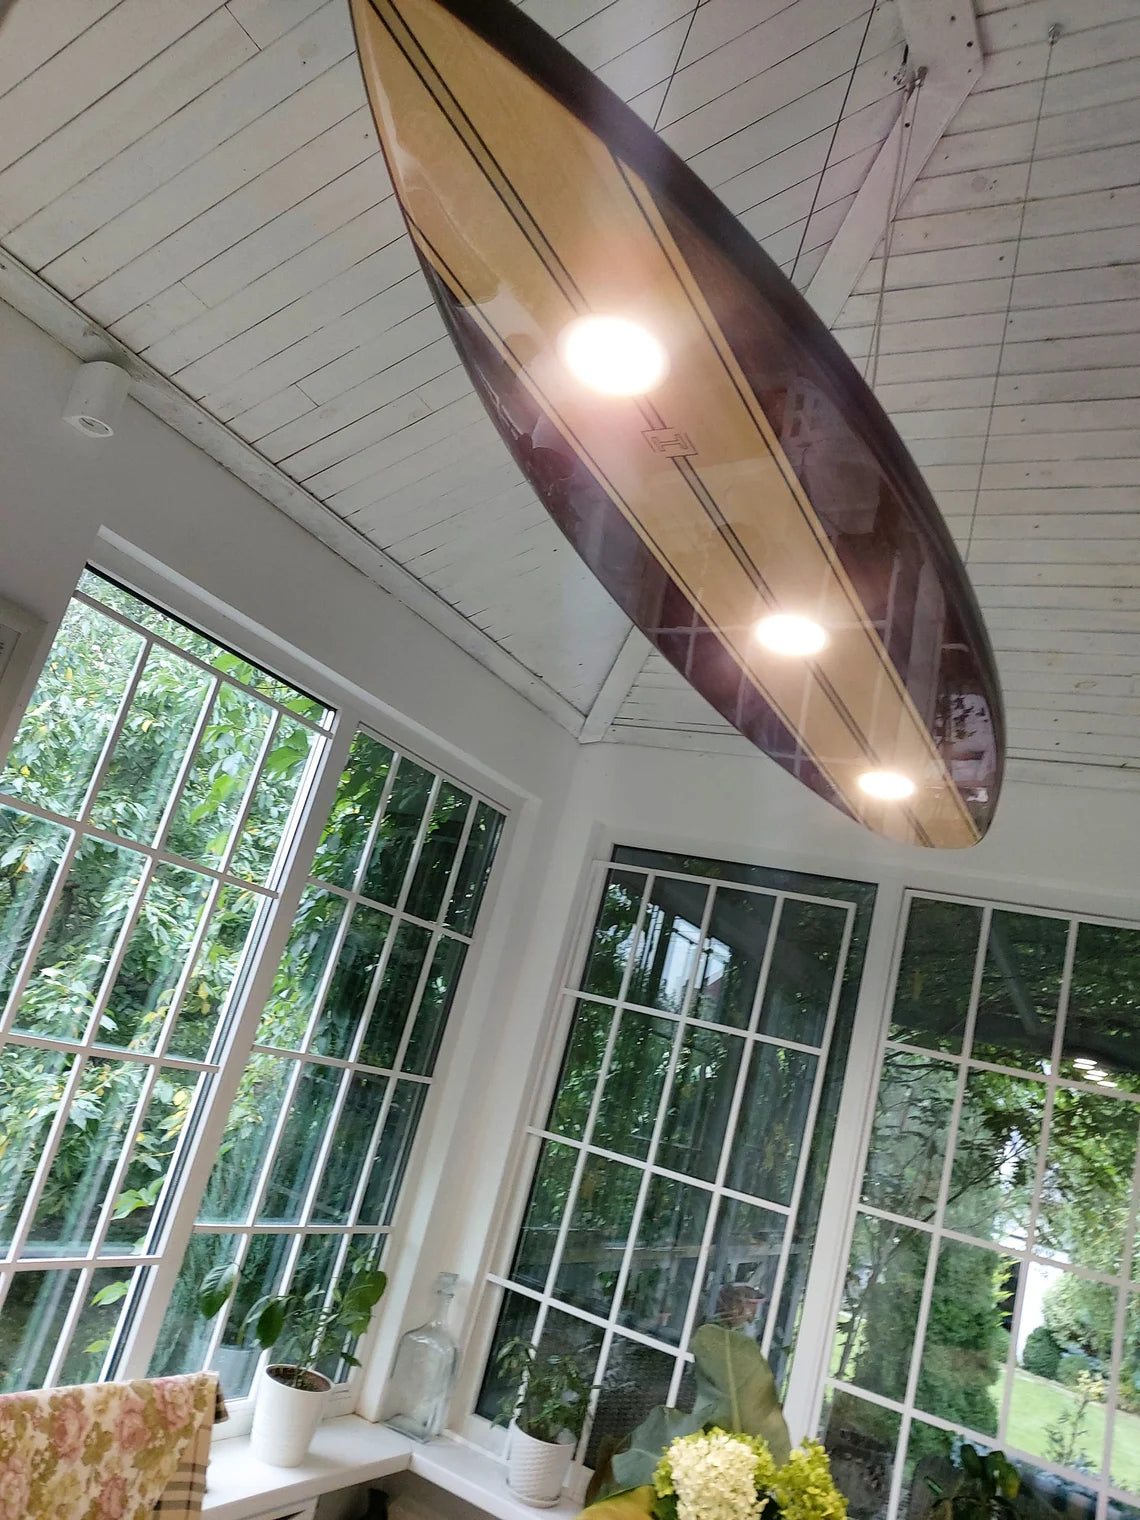 Multicolor Surfing Board Shaped Ceiling Chandelier - Pool Billiard Table Light